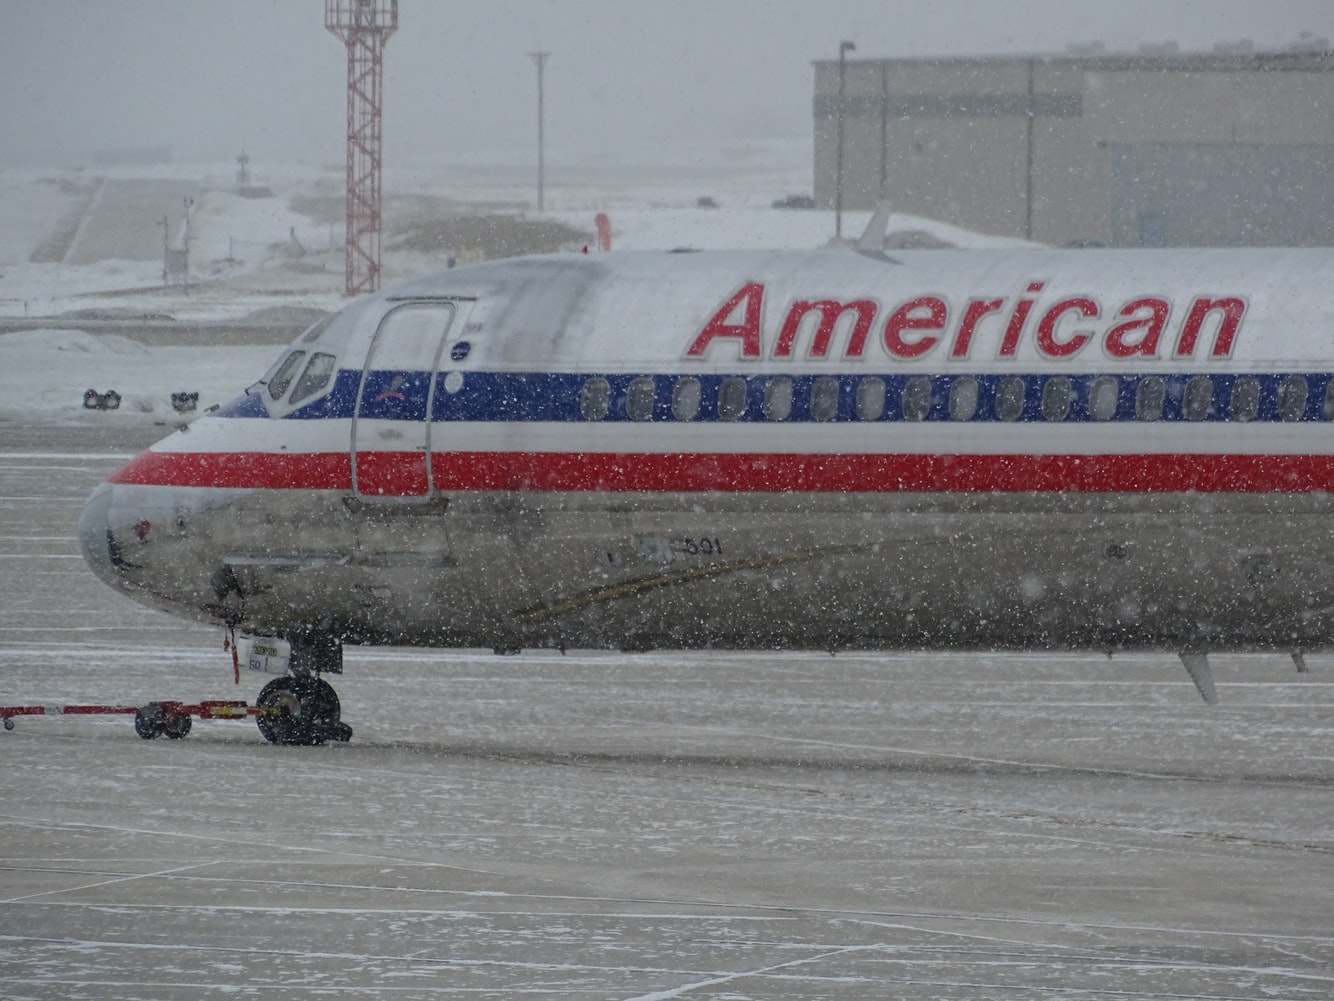 American Airlines Rain